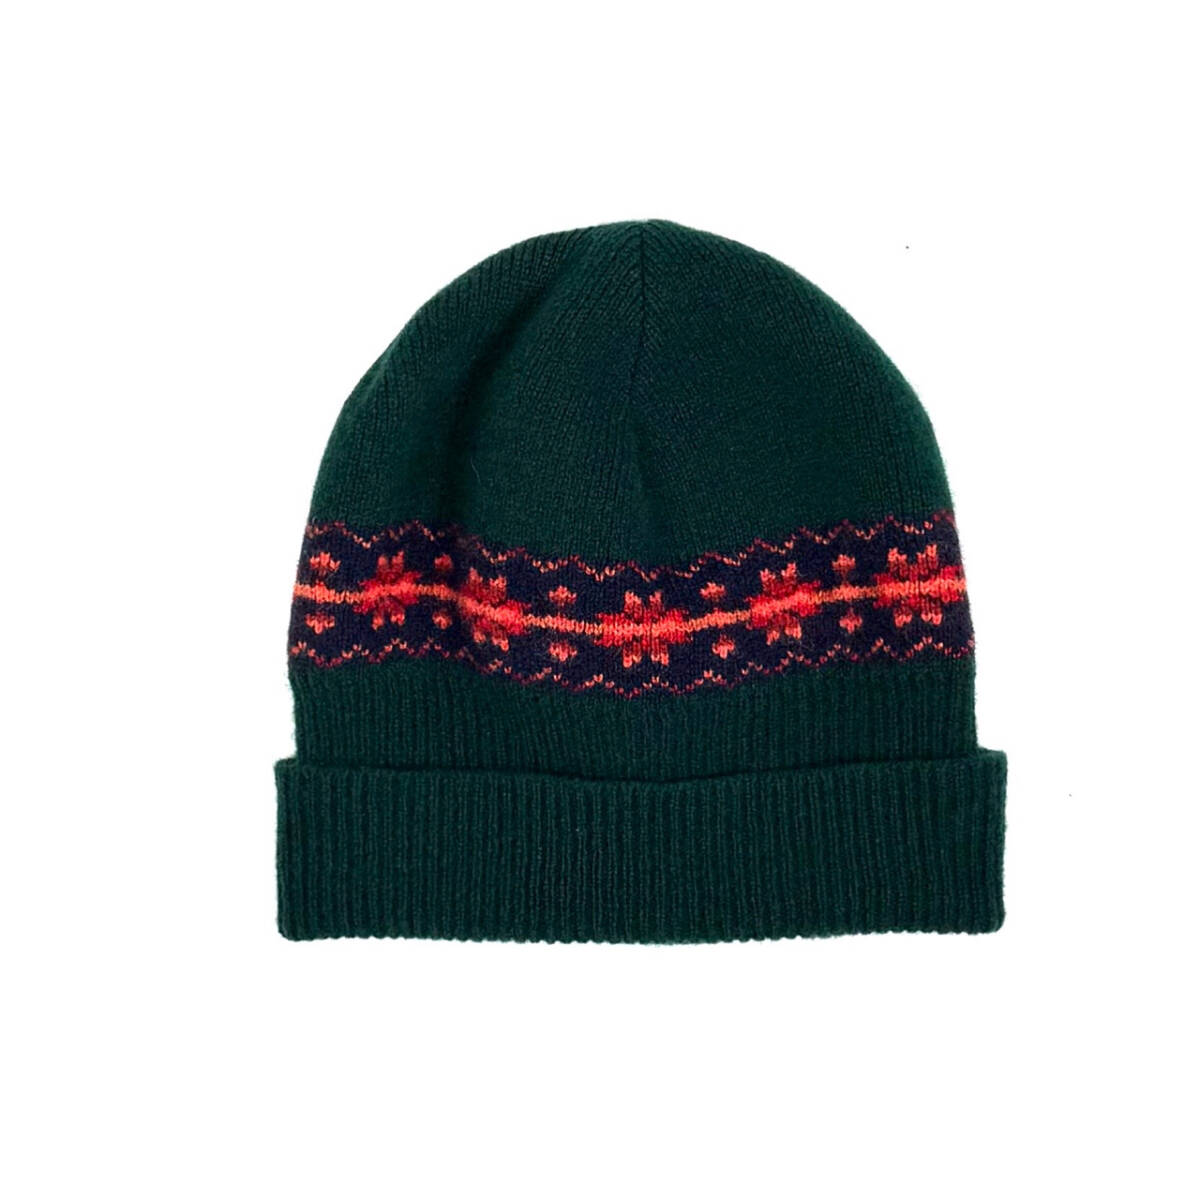  Scotland made INVERALLAN Inverallan knitted cap Beanie knit cap green 